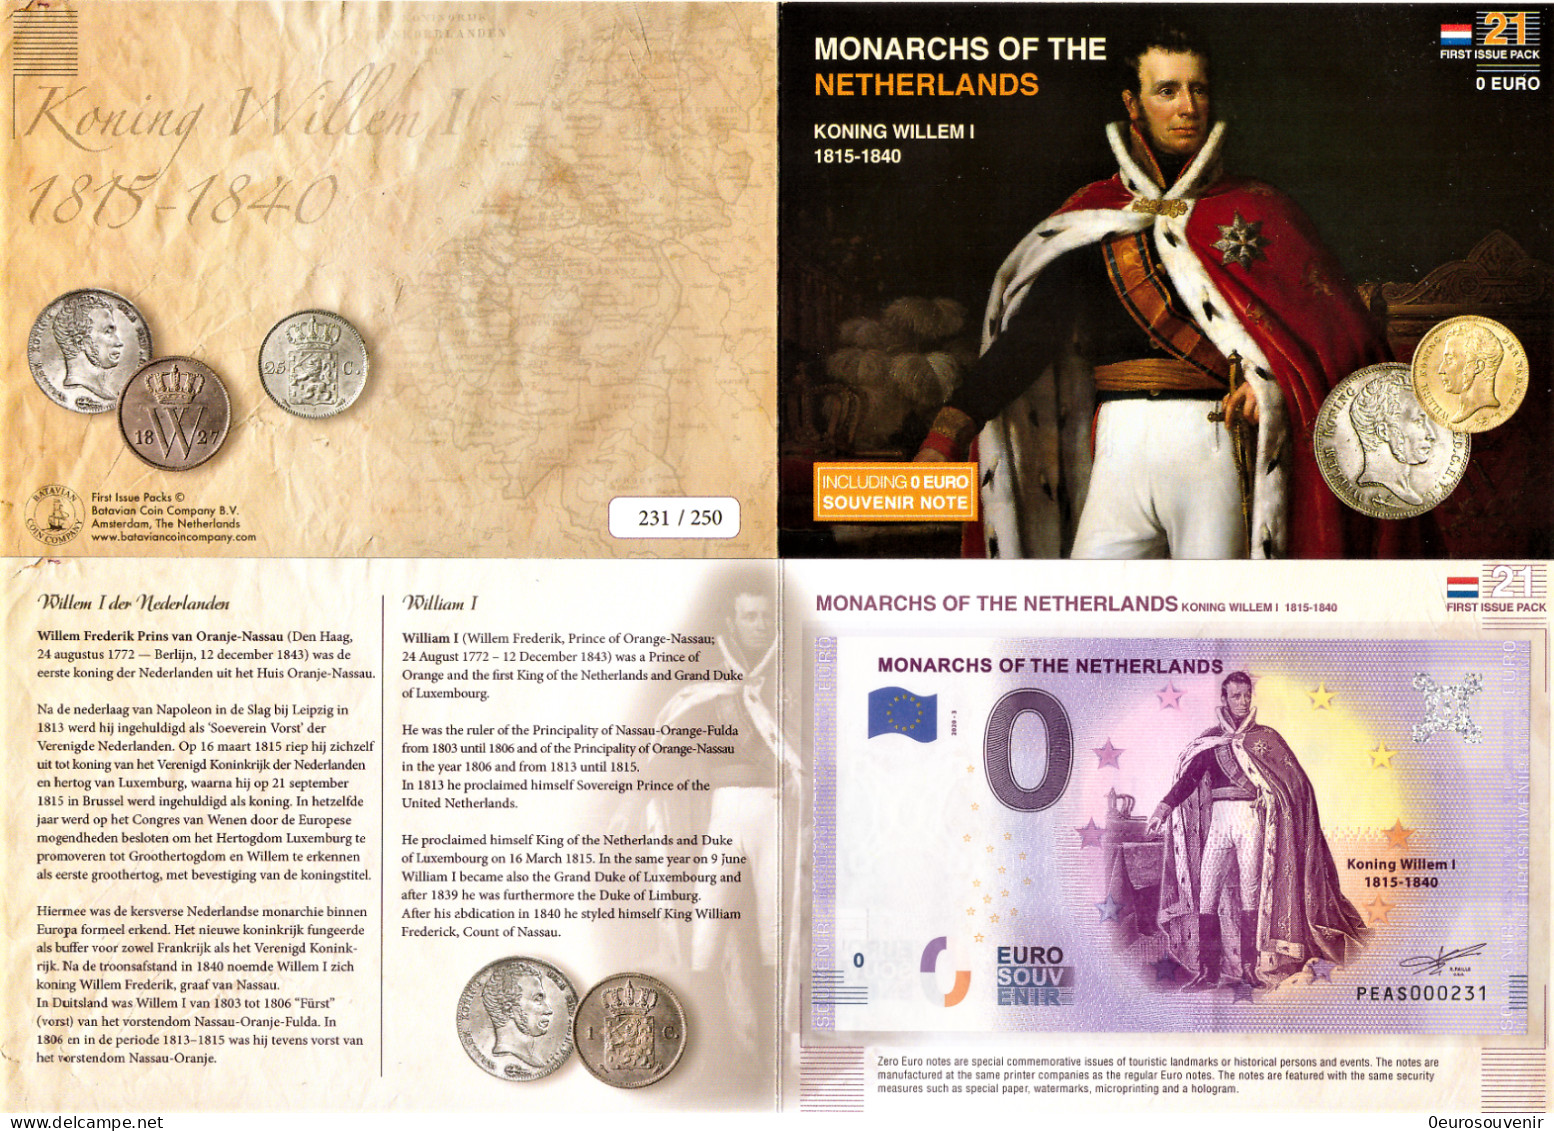 0-Euro PEAS 2020-3 MONARCHS OF THE NETHERLANDS WILLEM I 1815-1840 First Issue Pack No. Nur Bis #250 ! - Privatentwürfe